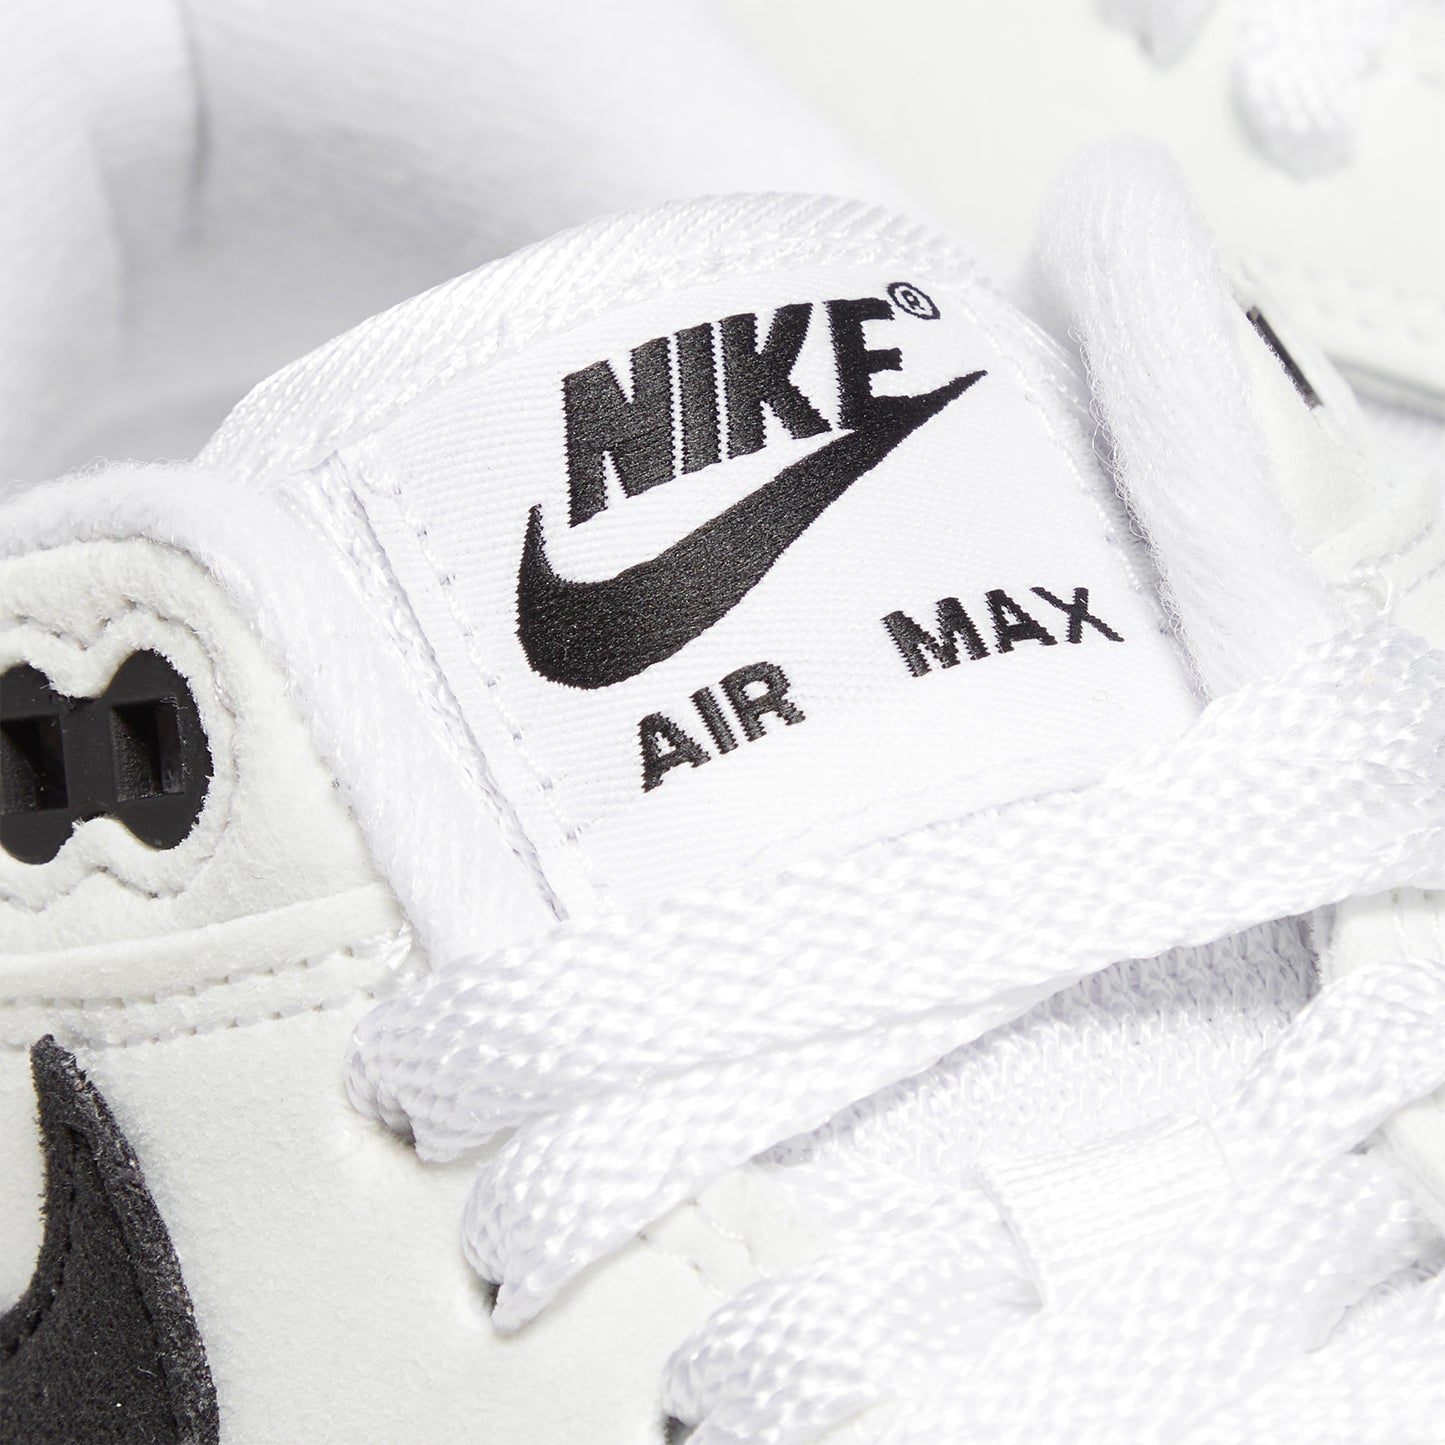 Nike Womens Air Max 1 (White/Black)